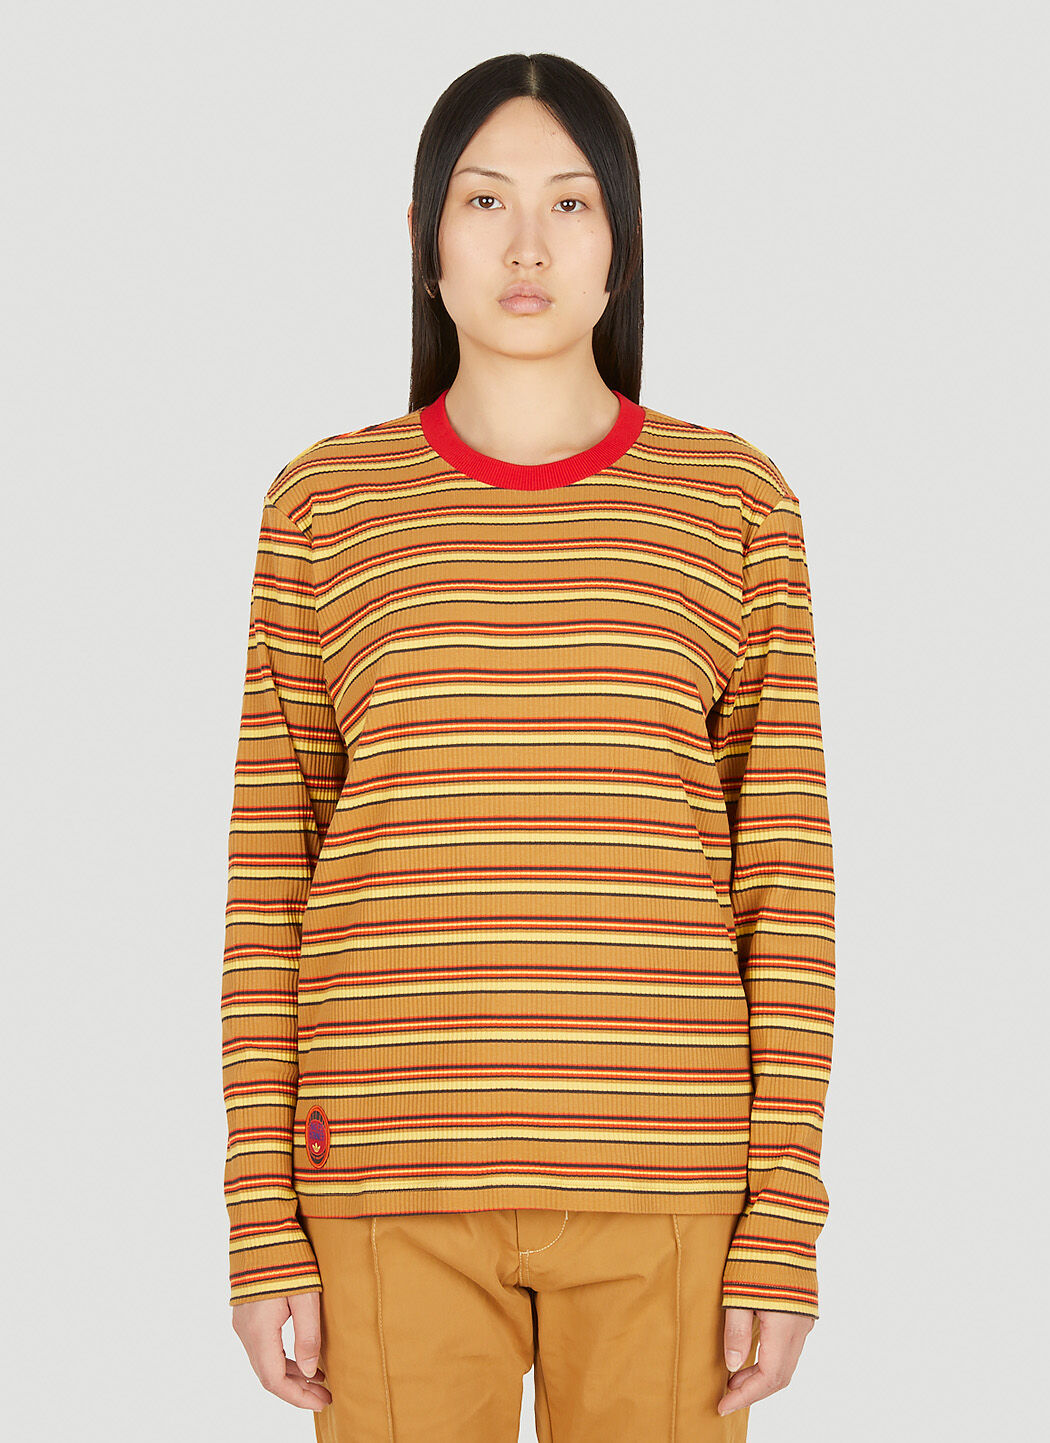 adidas by Wales Bonner Orange Striped Long Sleeve T-Shirt | LN-CC®